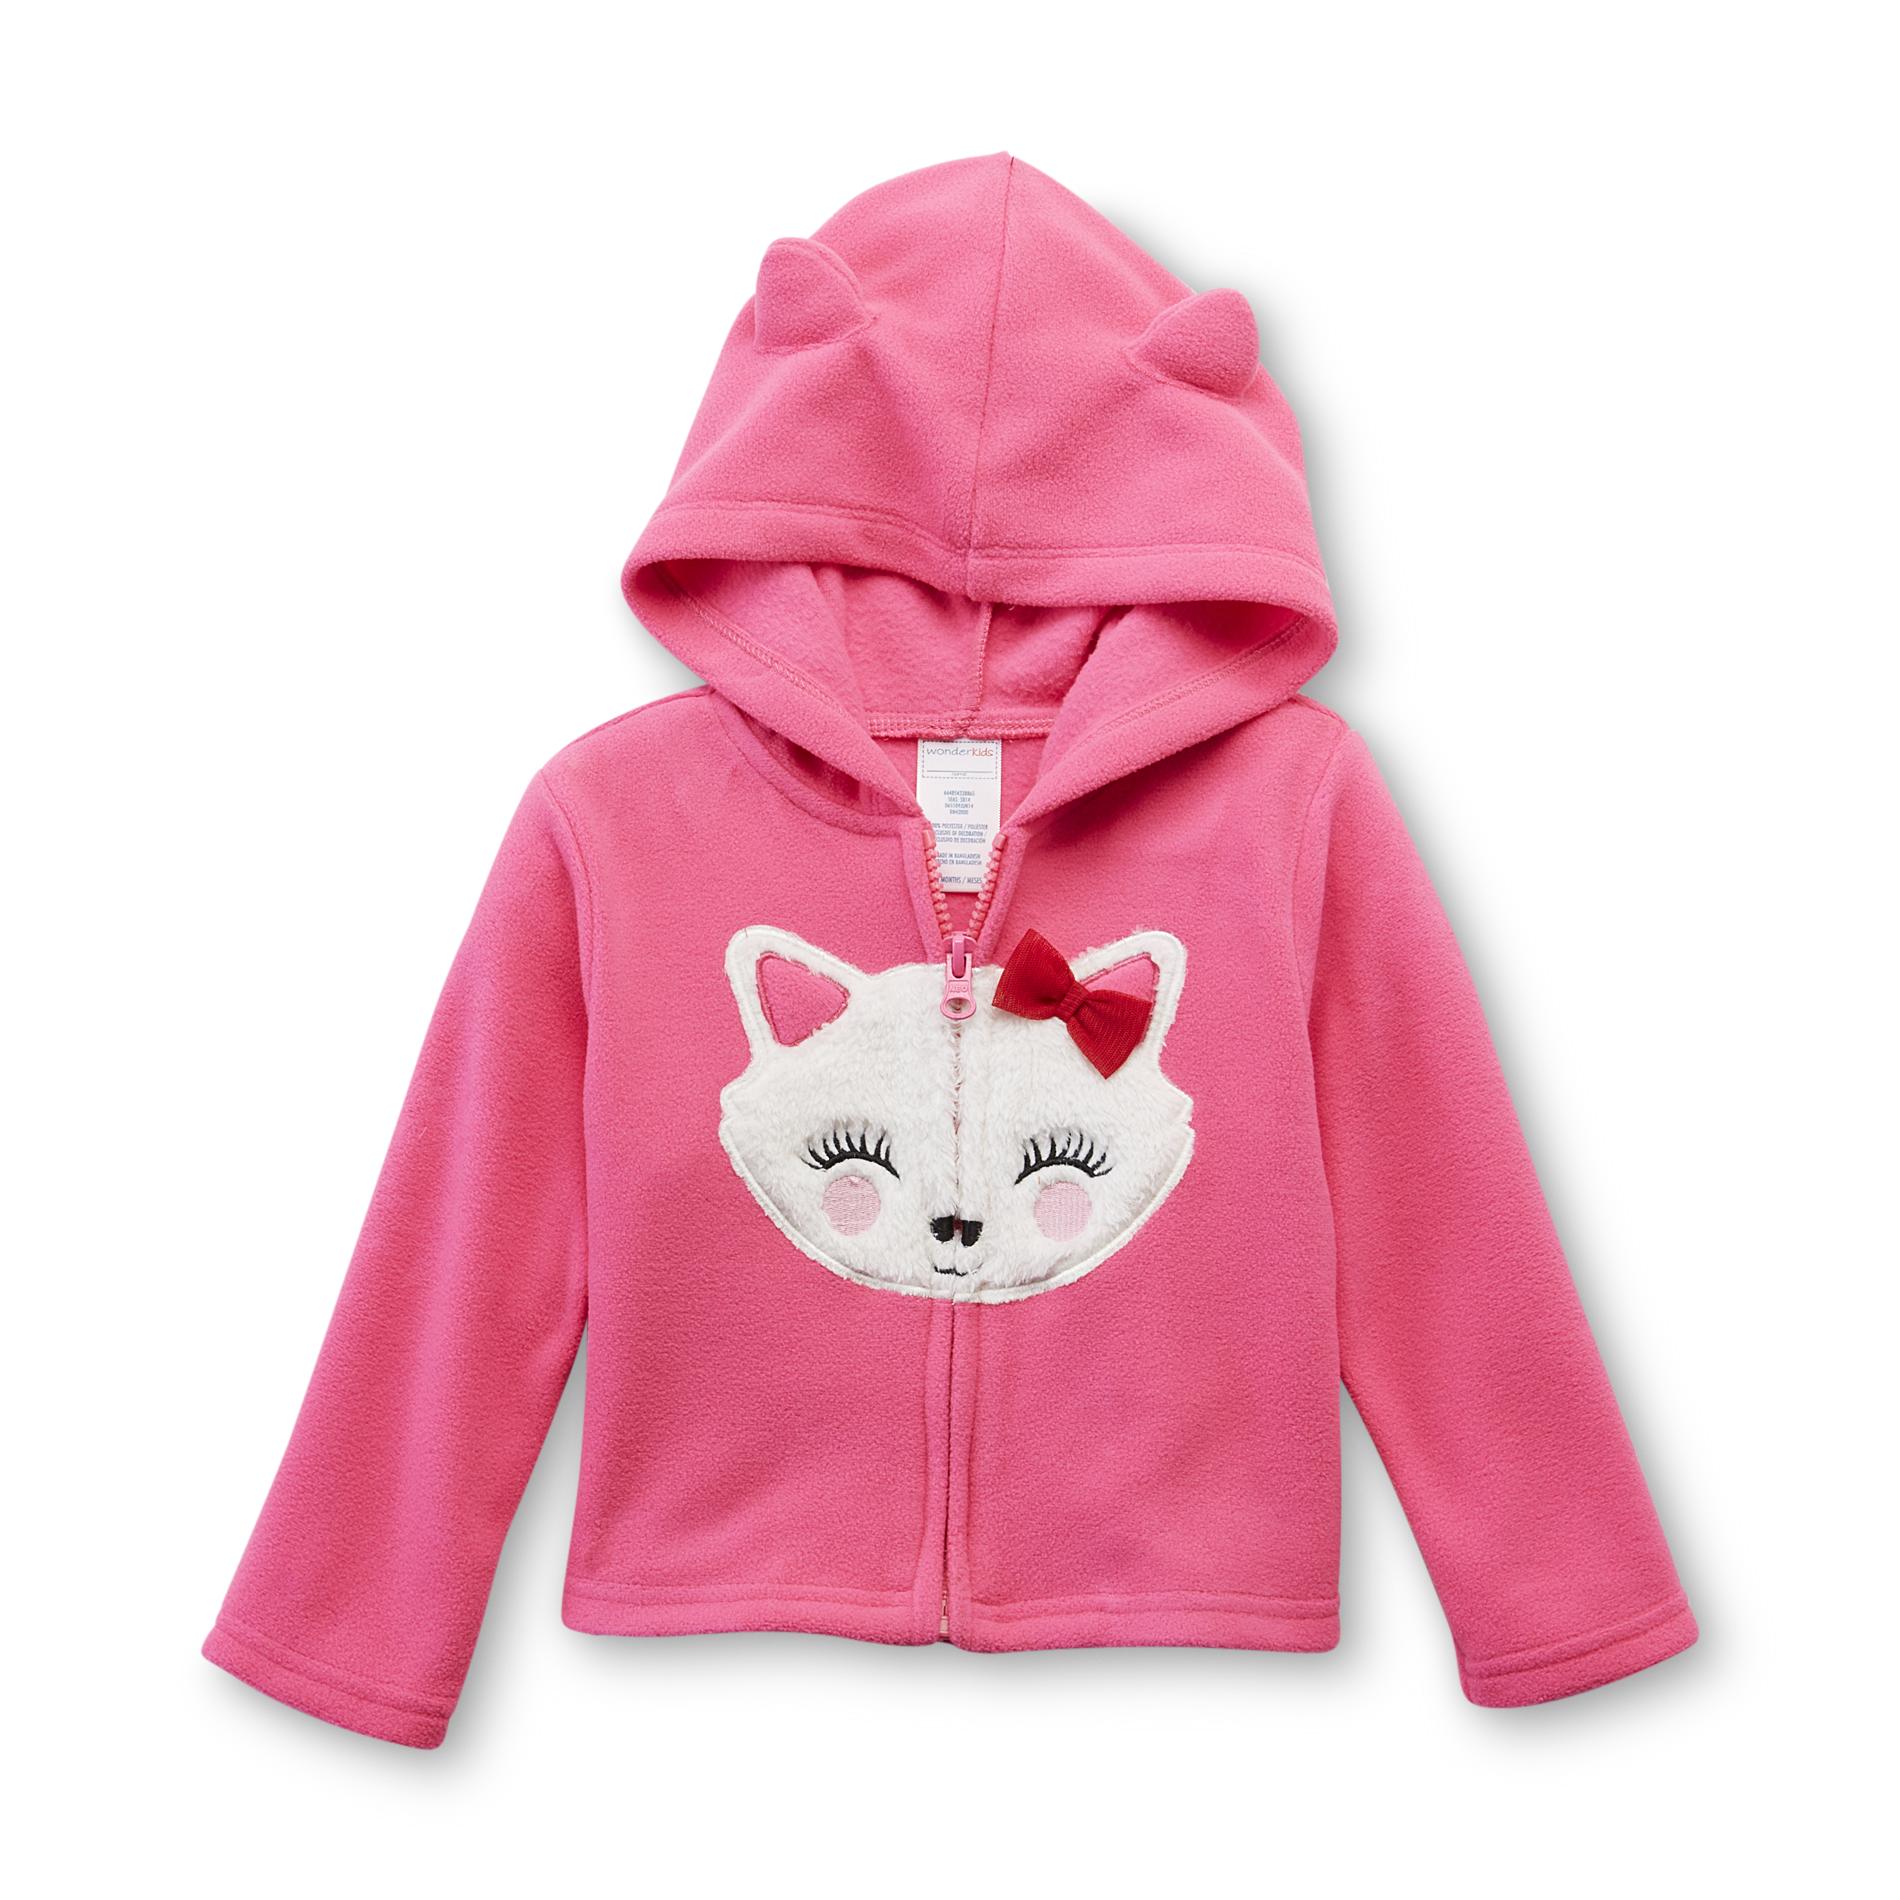 WonderKids Infant & Toddler Girl's Critter Hoodie Jacket - Cat